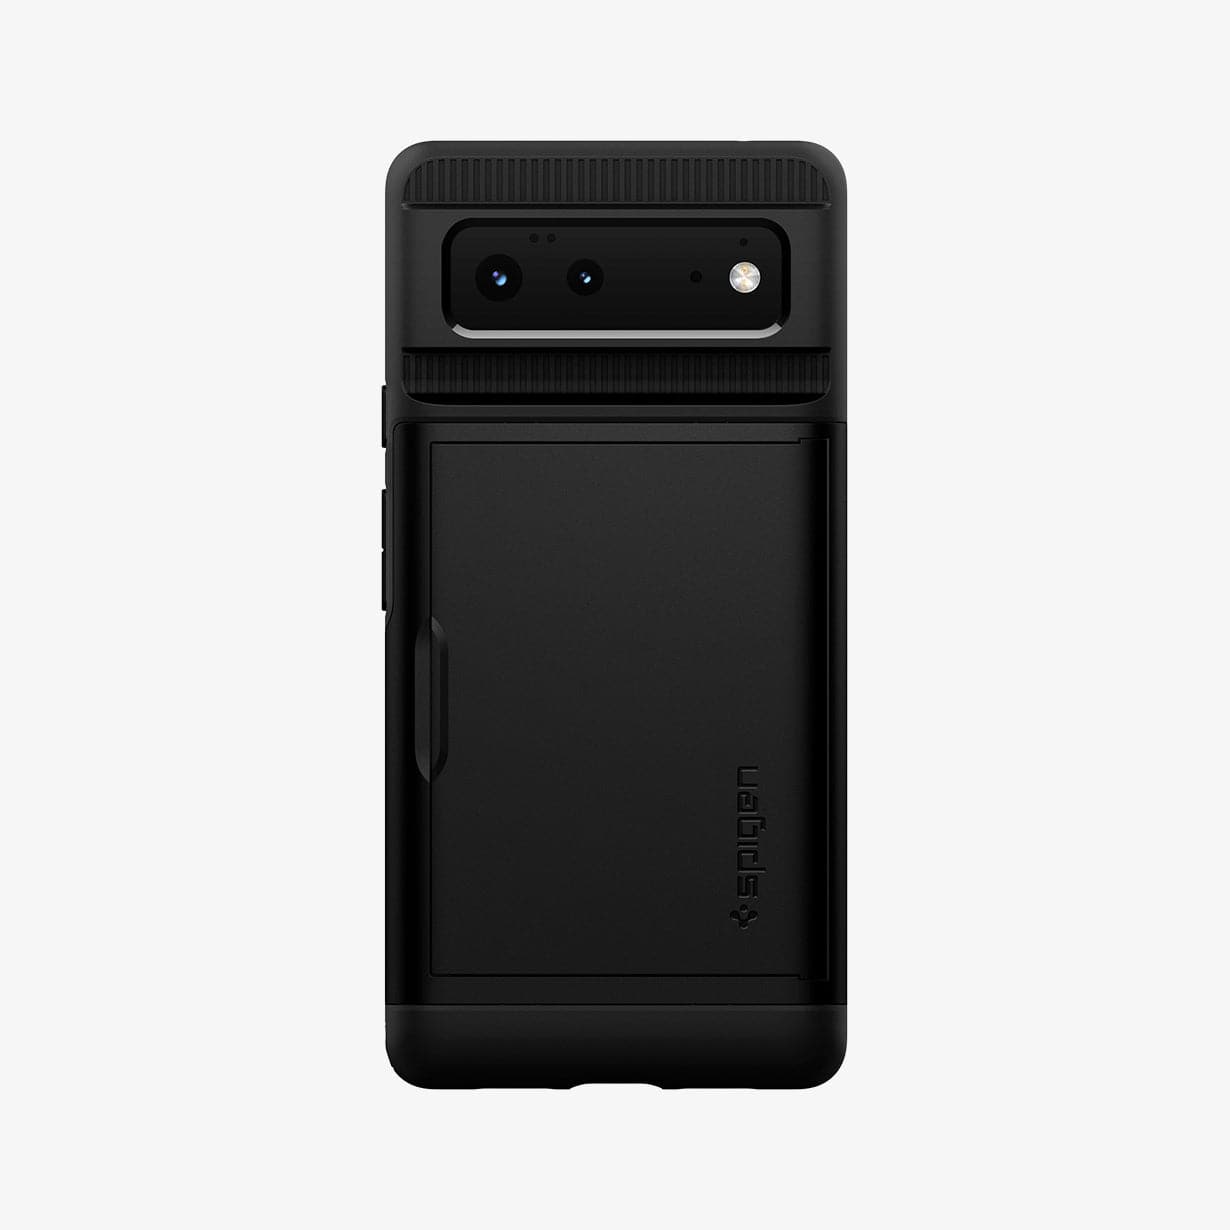 ACS03440 - Pixel 6 Case Slim Armor CS in black showing the back